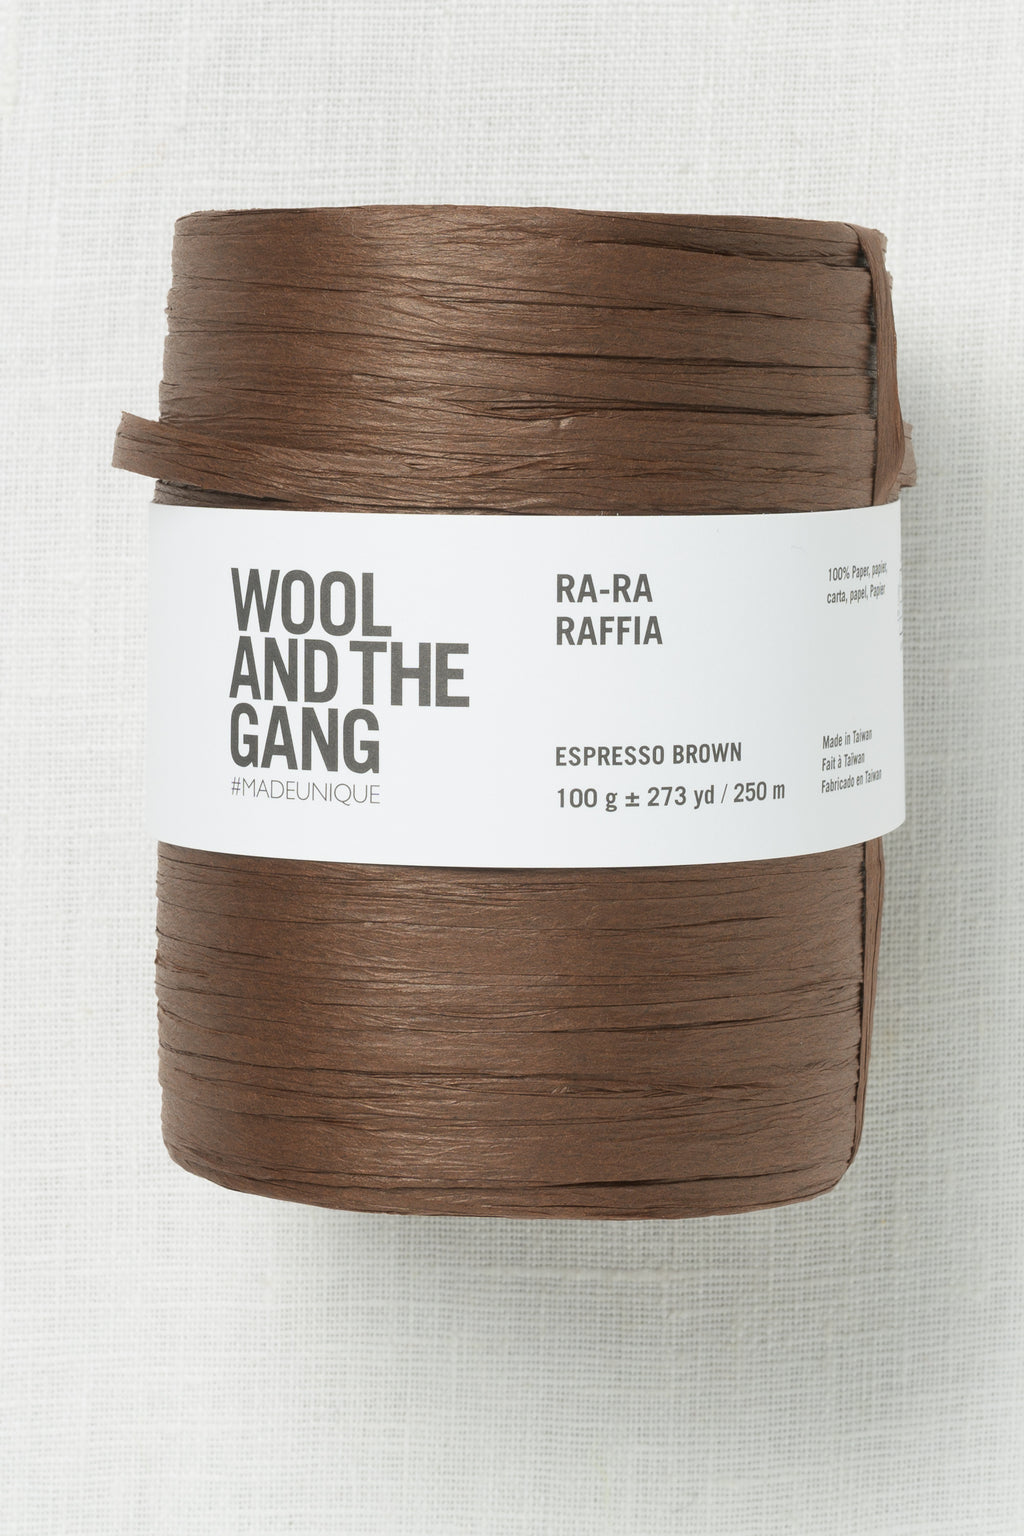 Wool and the Gang Ra-Ra Raffia Espresso Brown